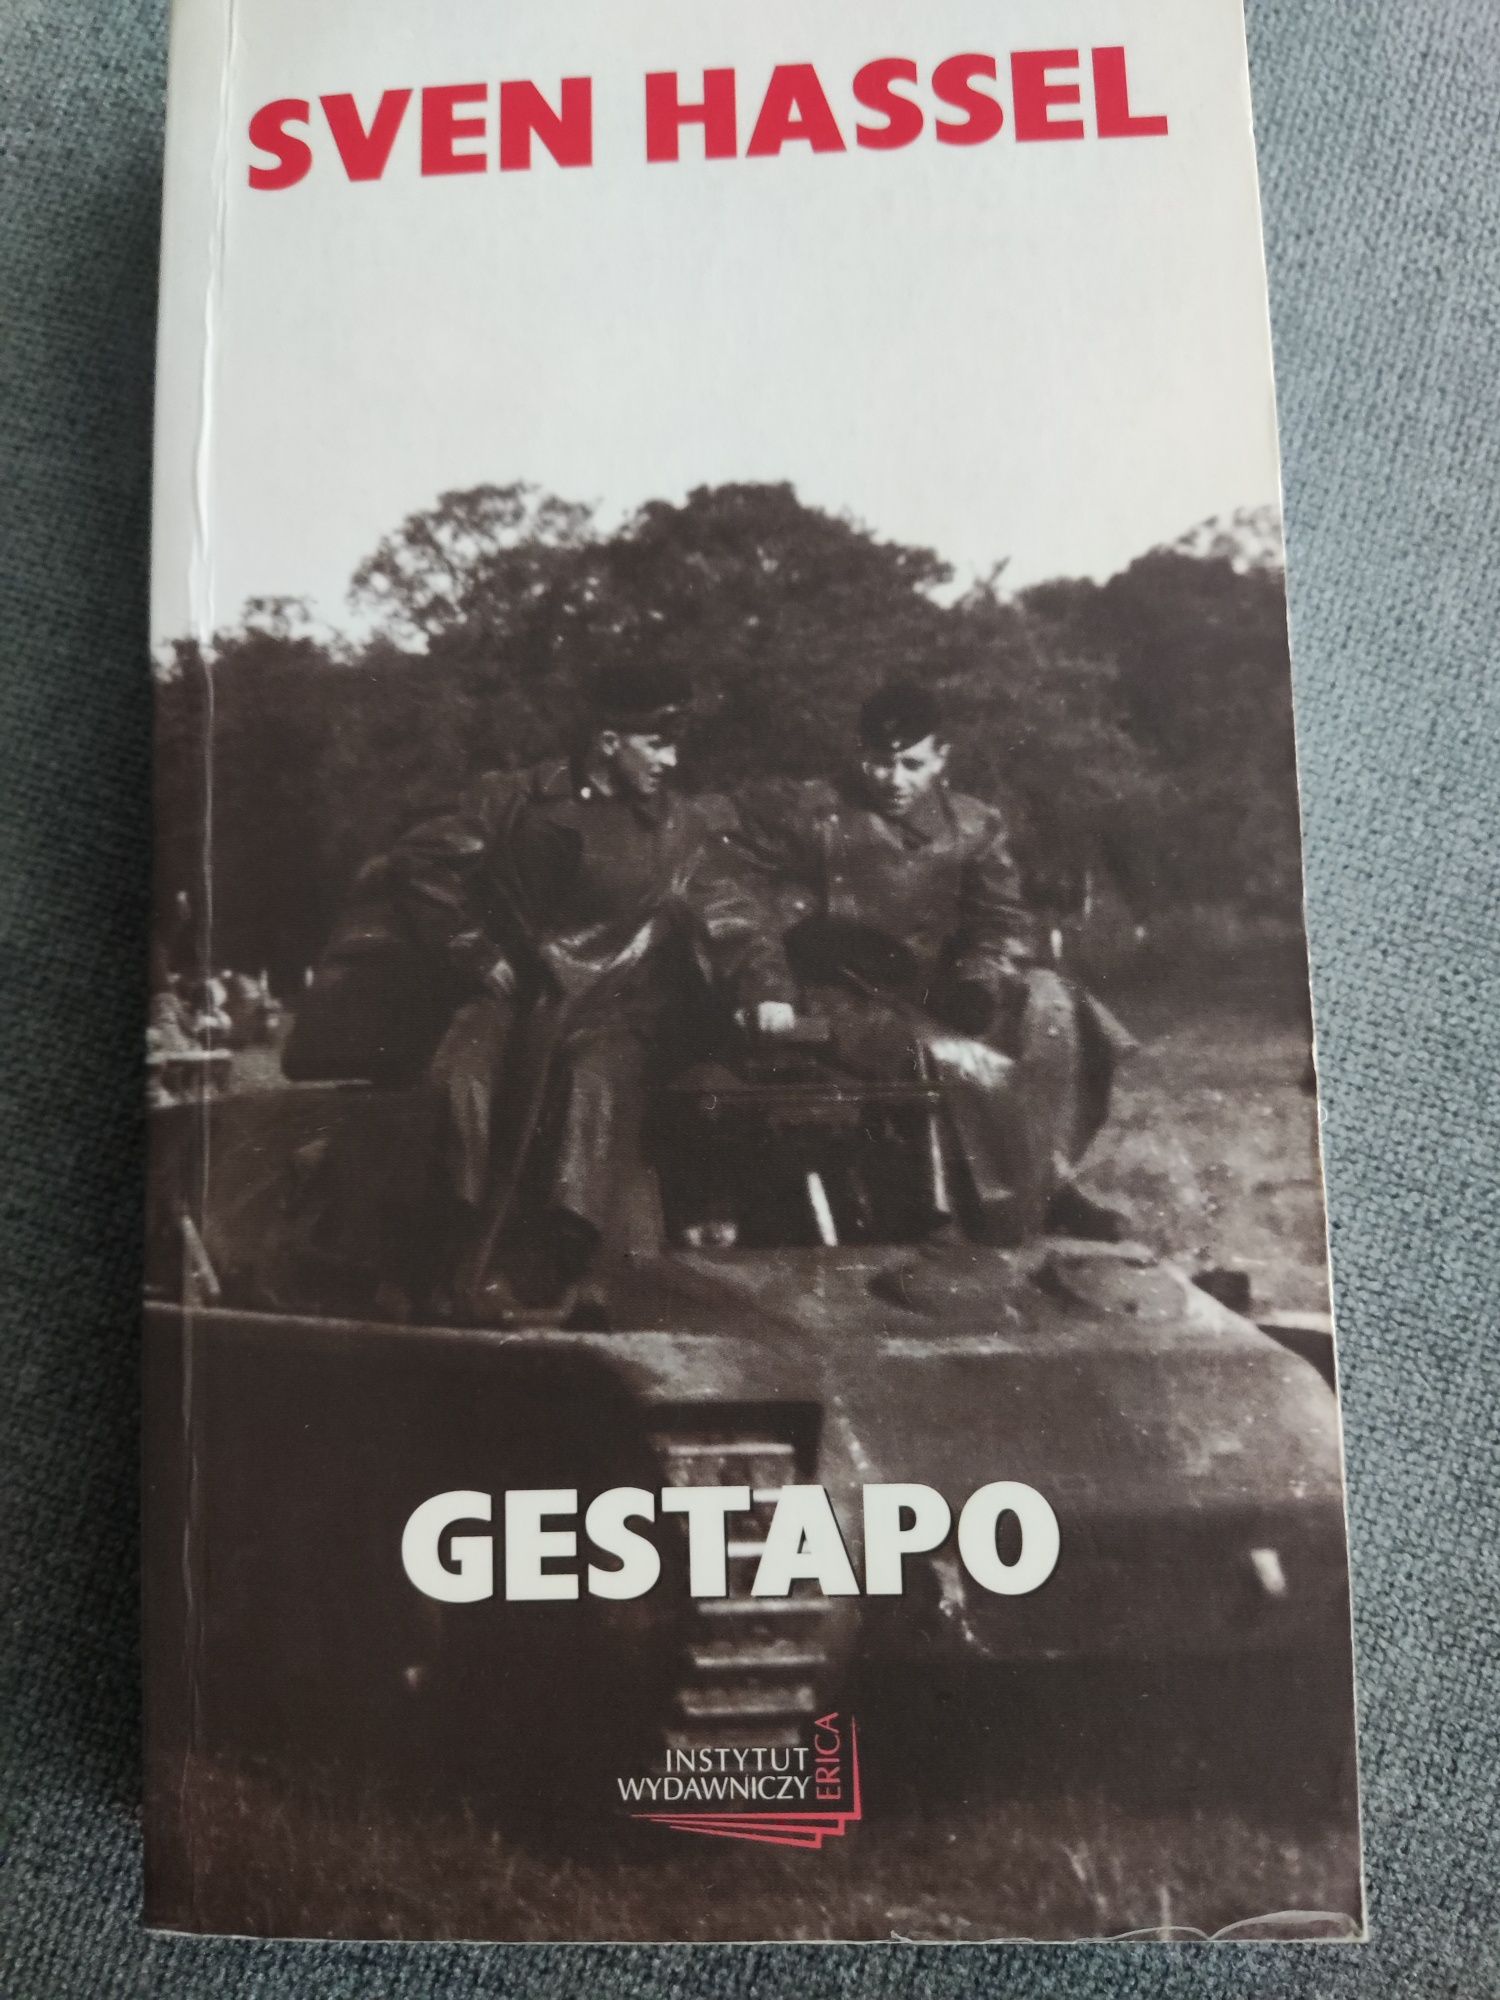 Książka "Gestapo"